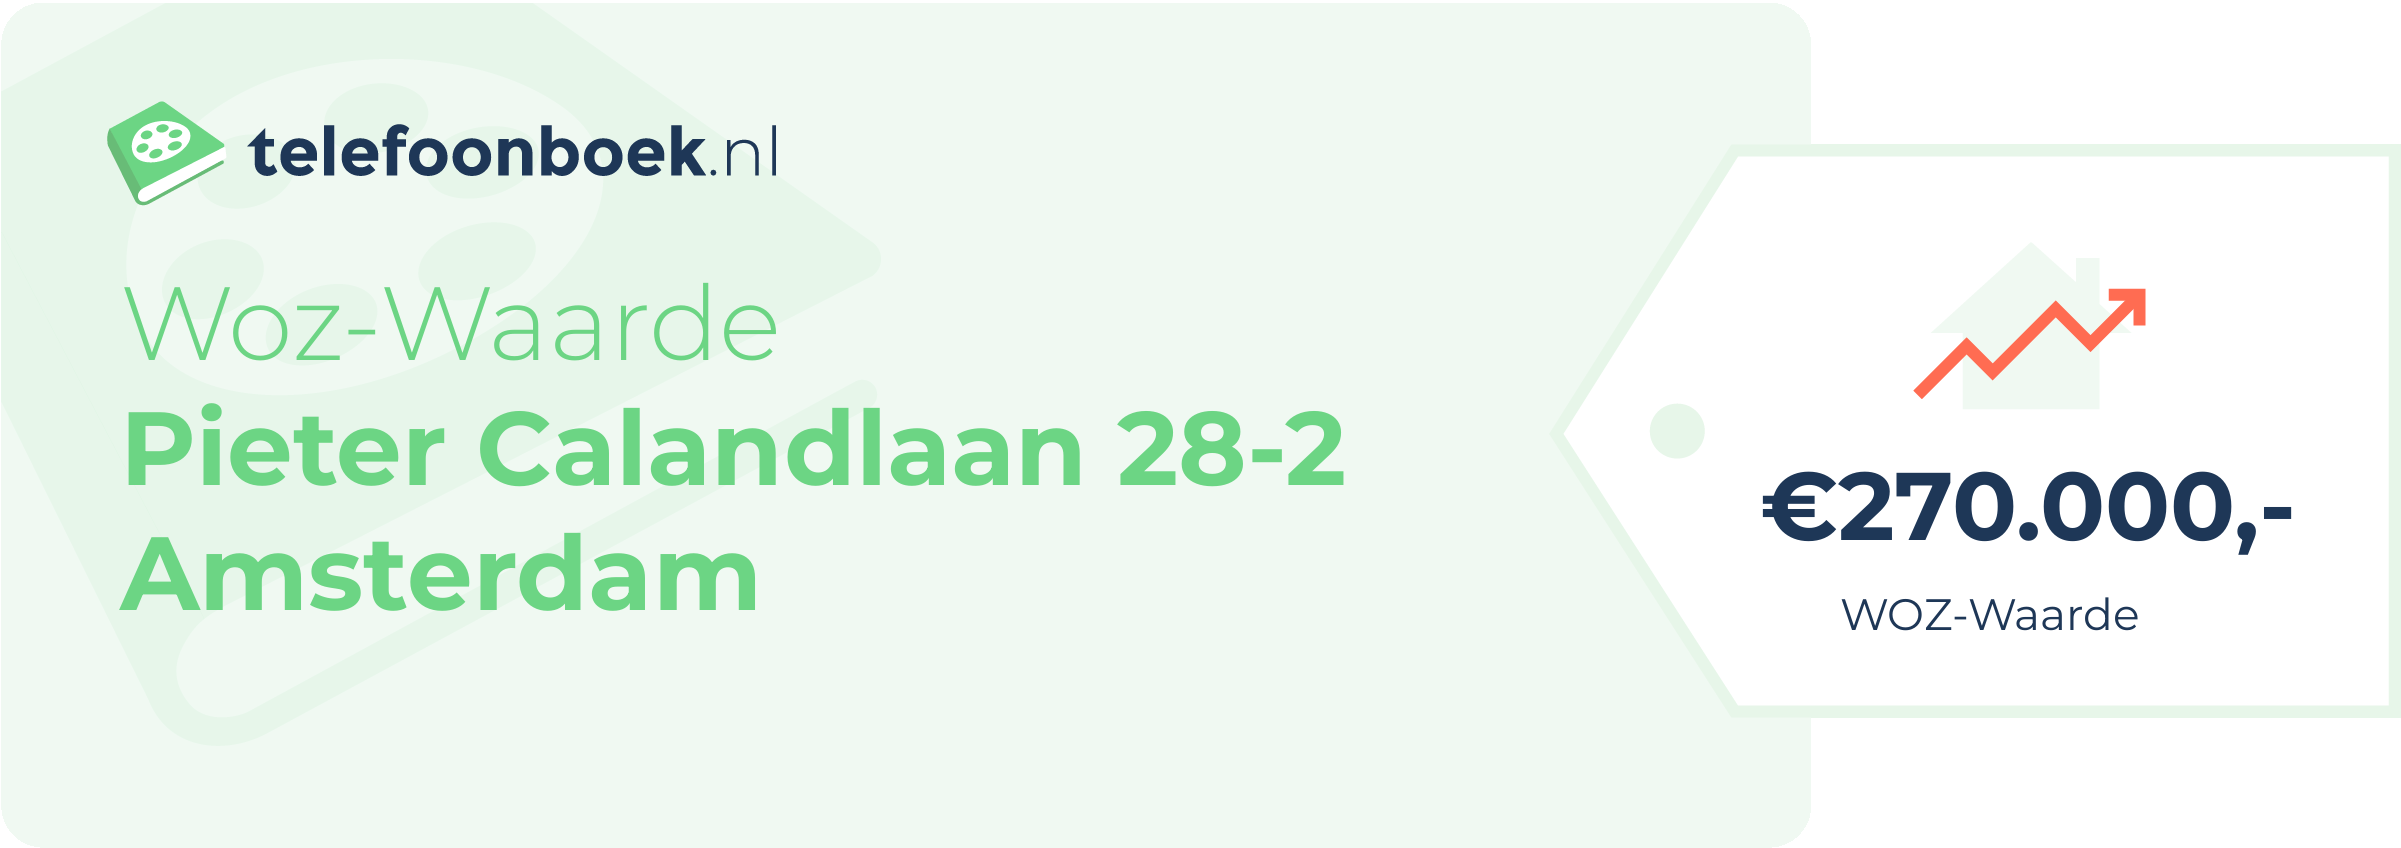 WOZ-waarde Pieter Calandlaan 28-2 Amsterdam